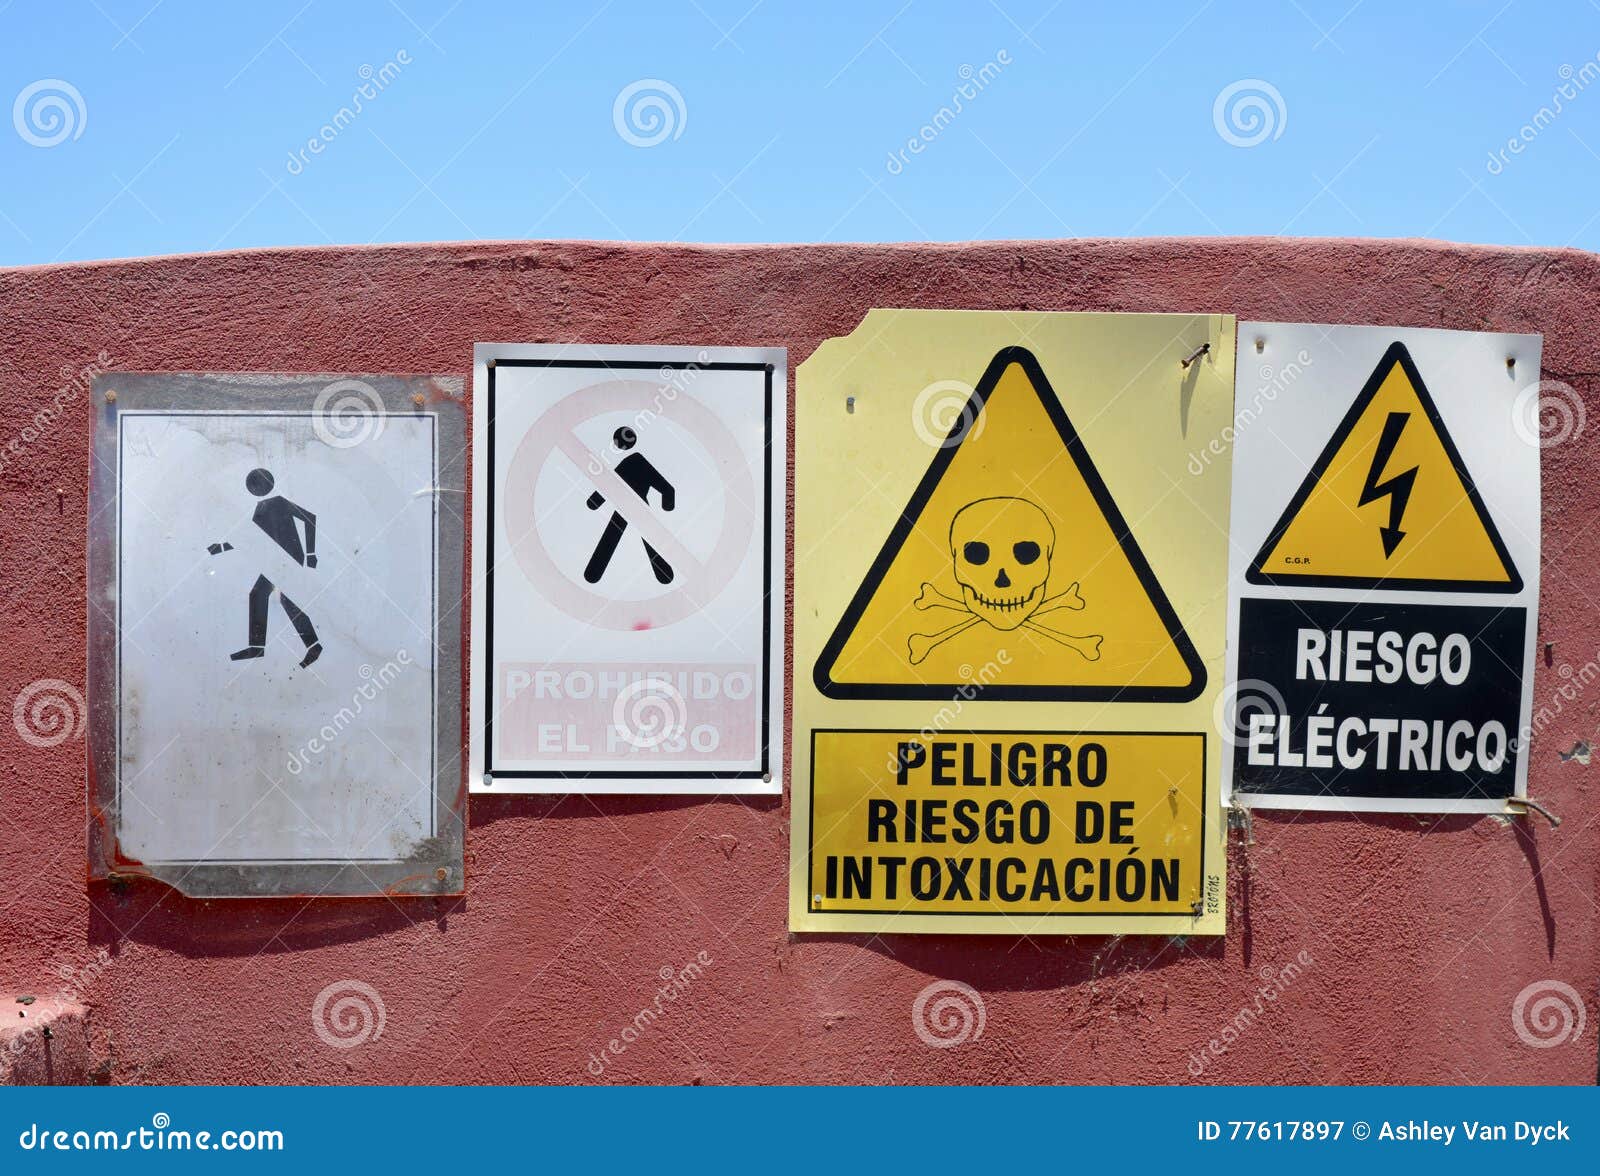 danger signs in spanish